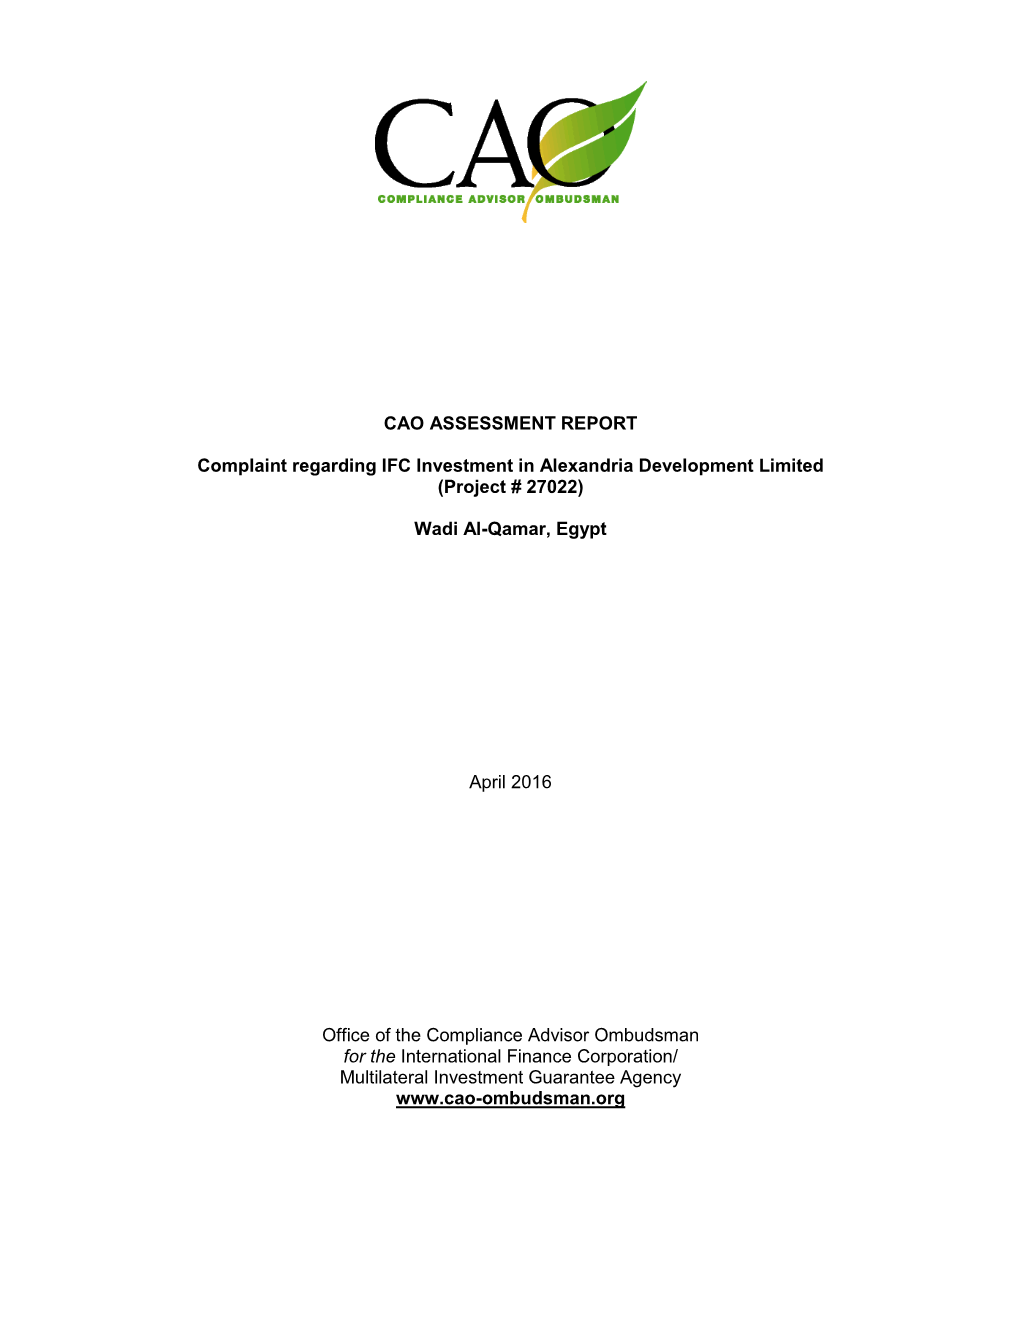 CAO ASSESSMENT REPORT Complaint Regarding IFC Investment in Alexandria Development Limited (Project # 27022) Wadi Al-Qamar